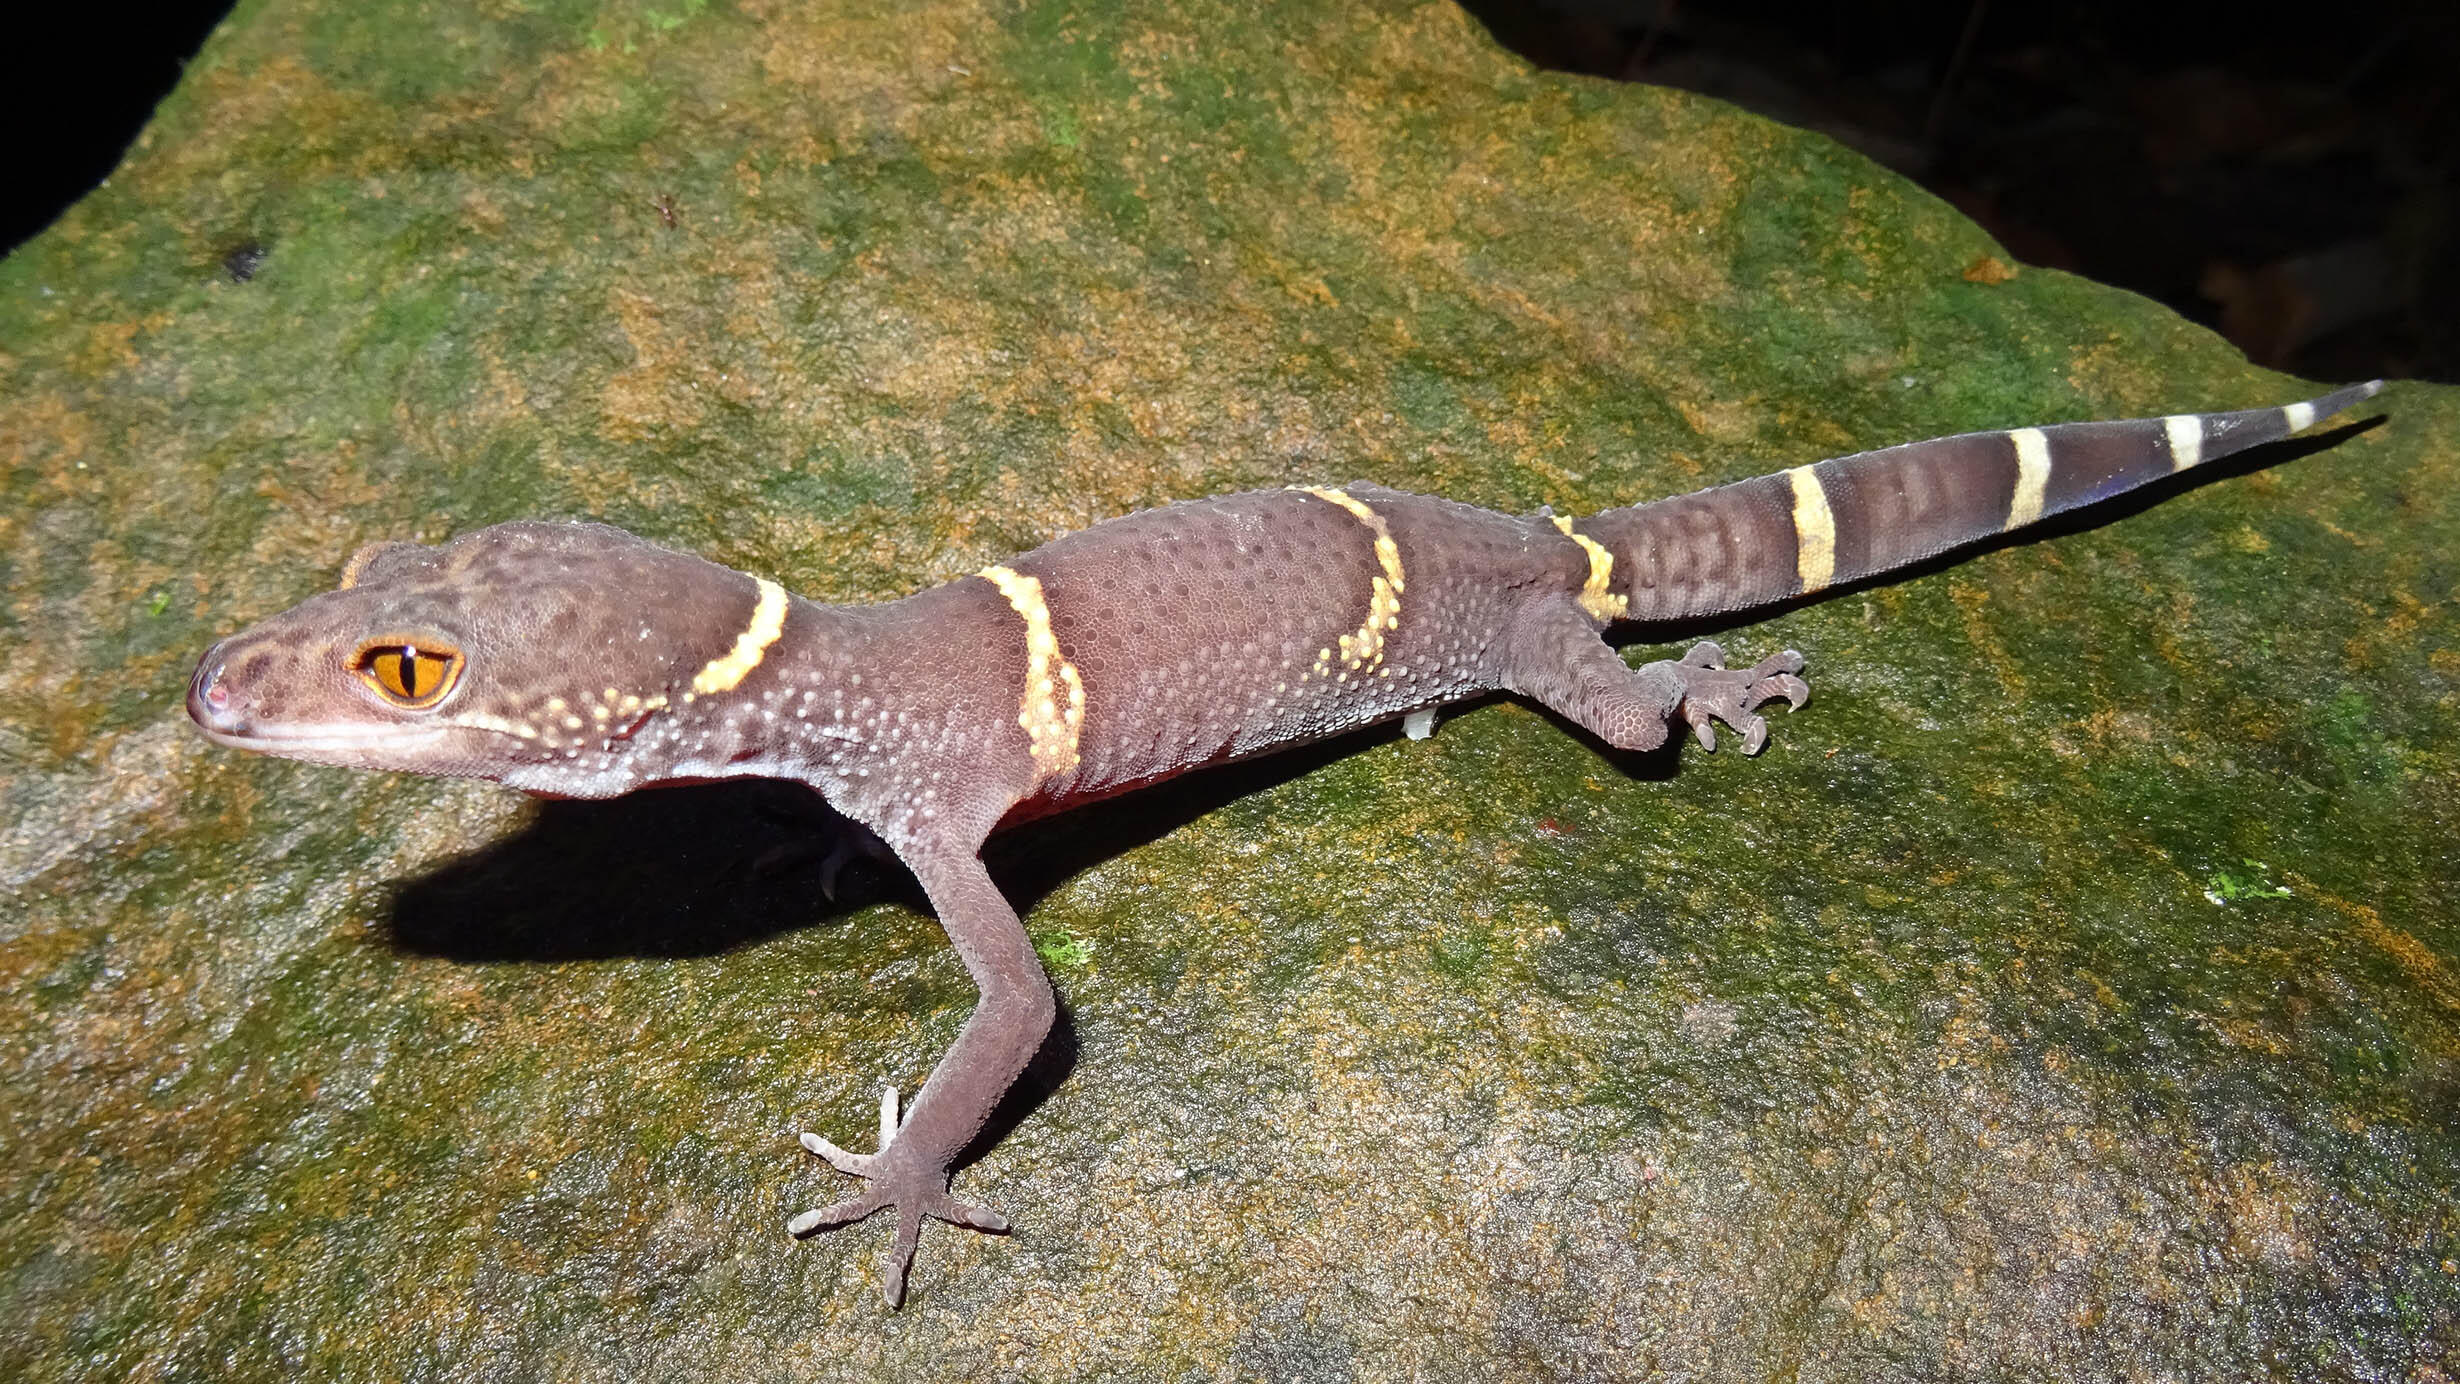 A tiger gecko strikes an alert pose on a mossy rock.